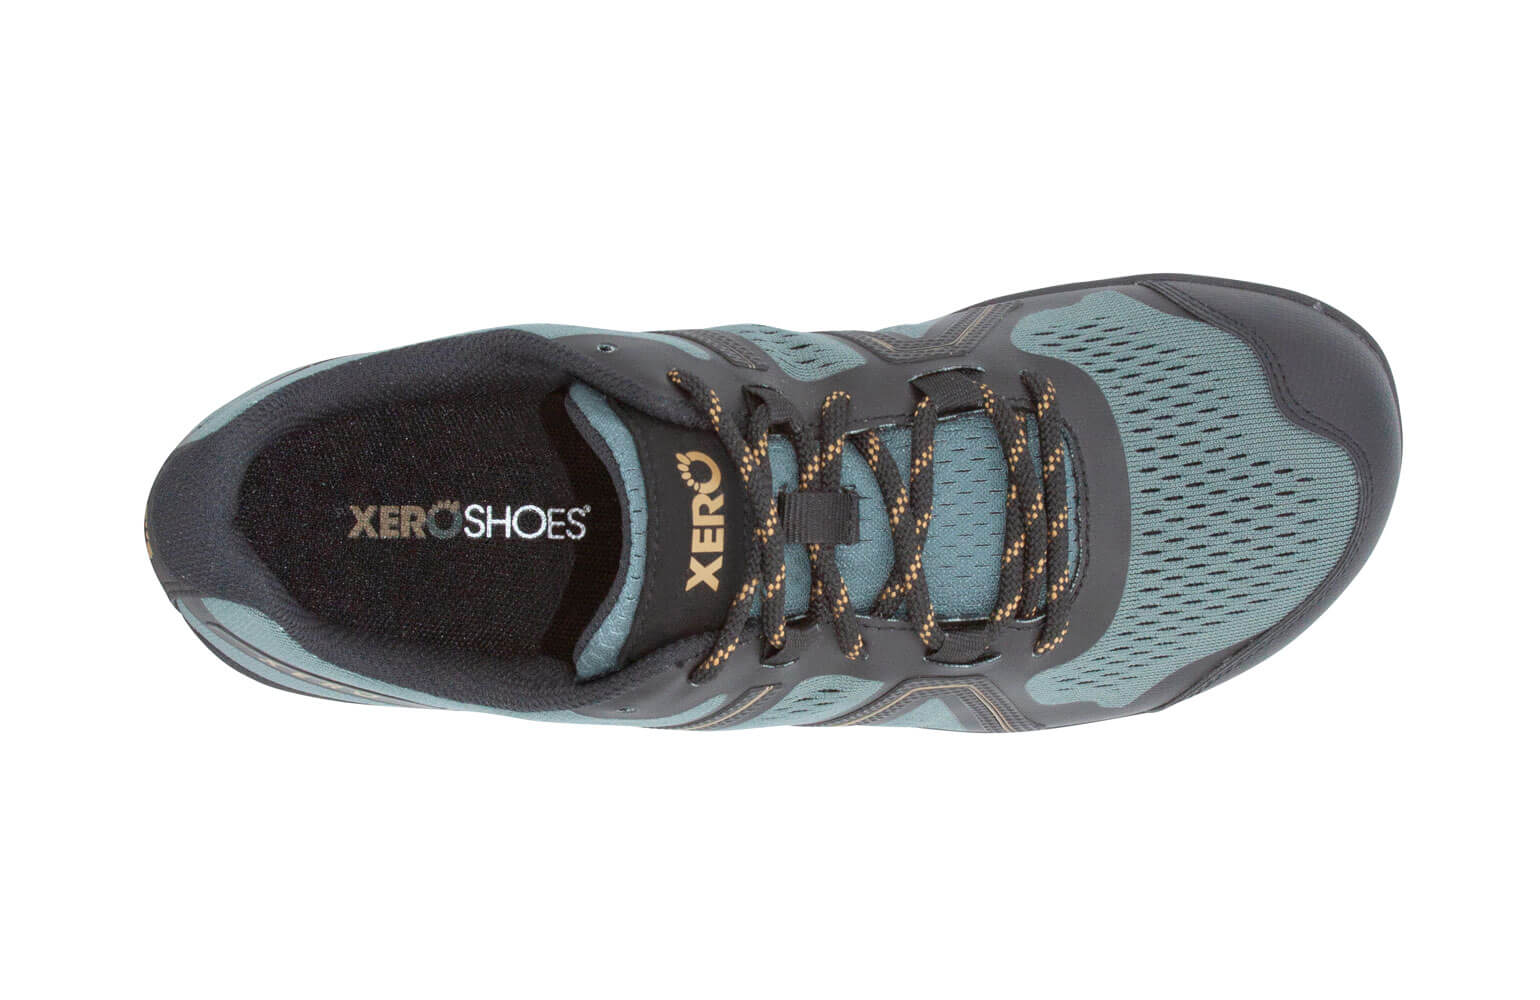 Chaussure 0 drop Mesa Trail Xero Shoes. Chaussure trail minimaliste